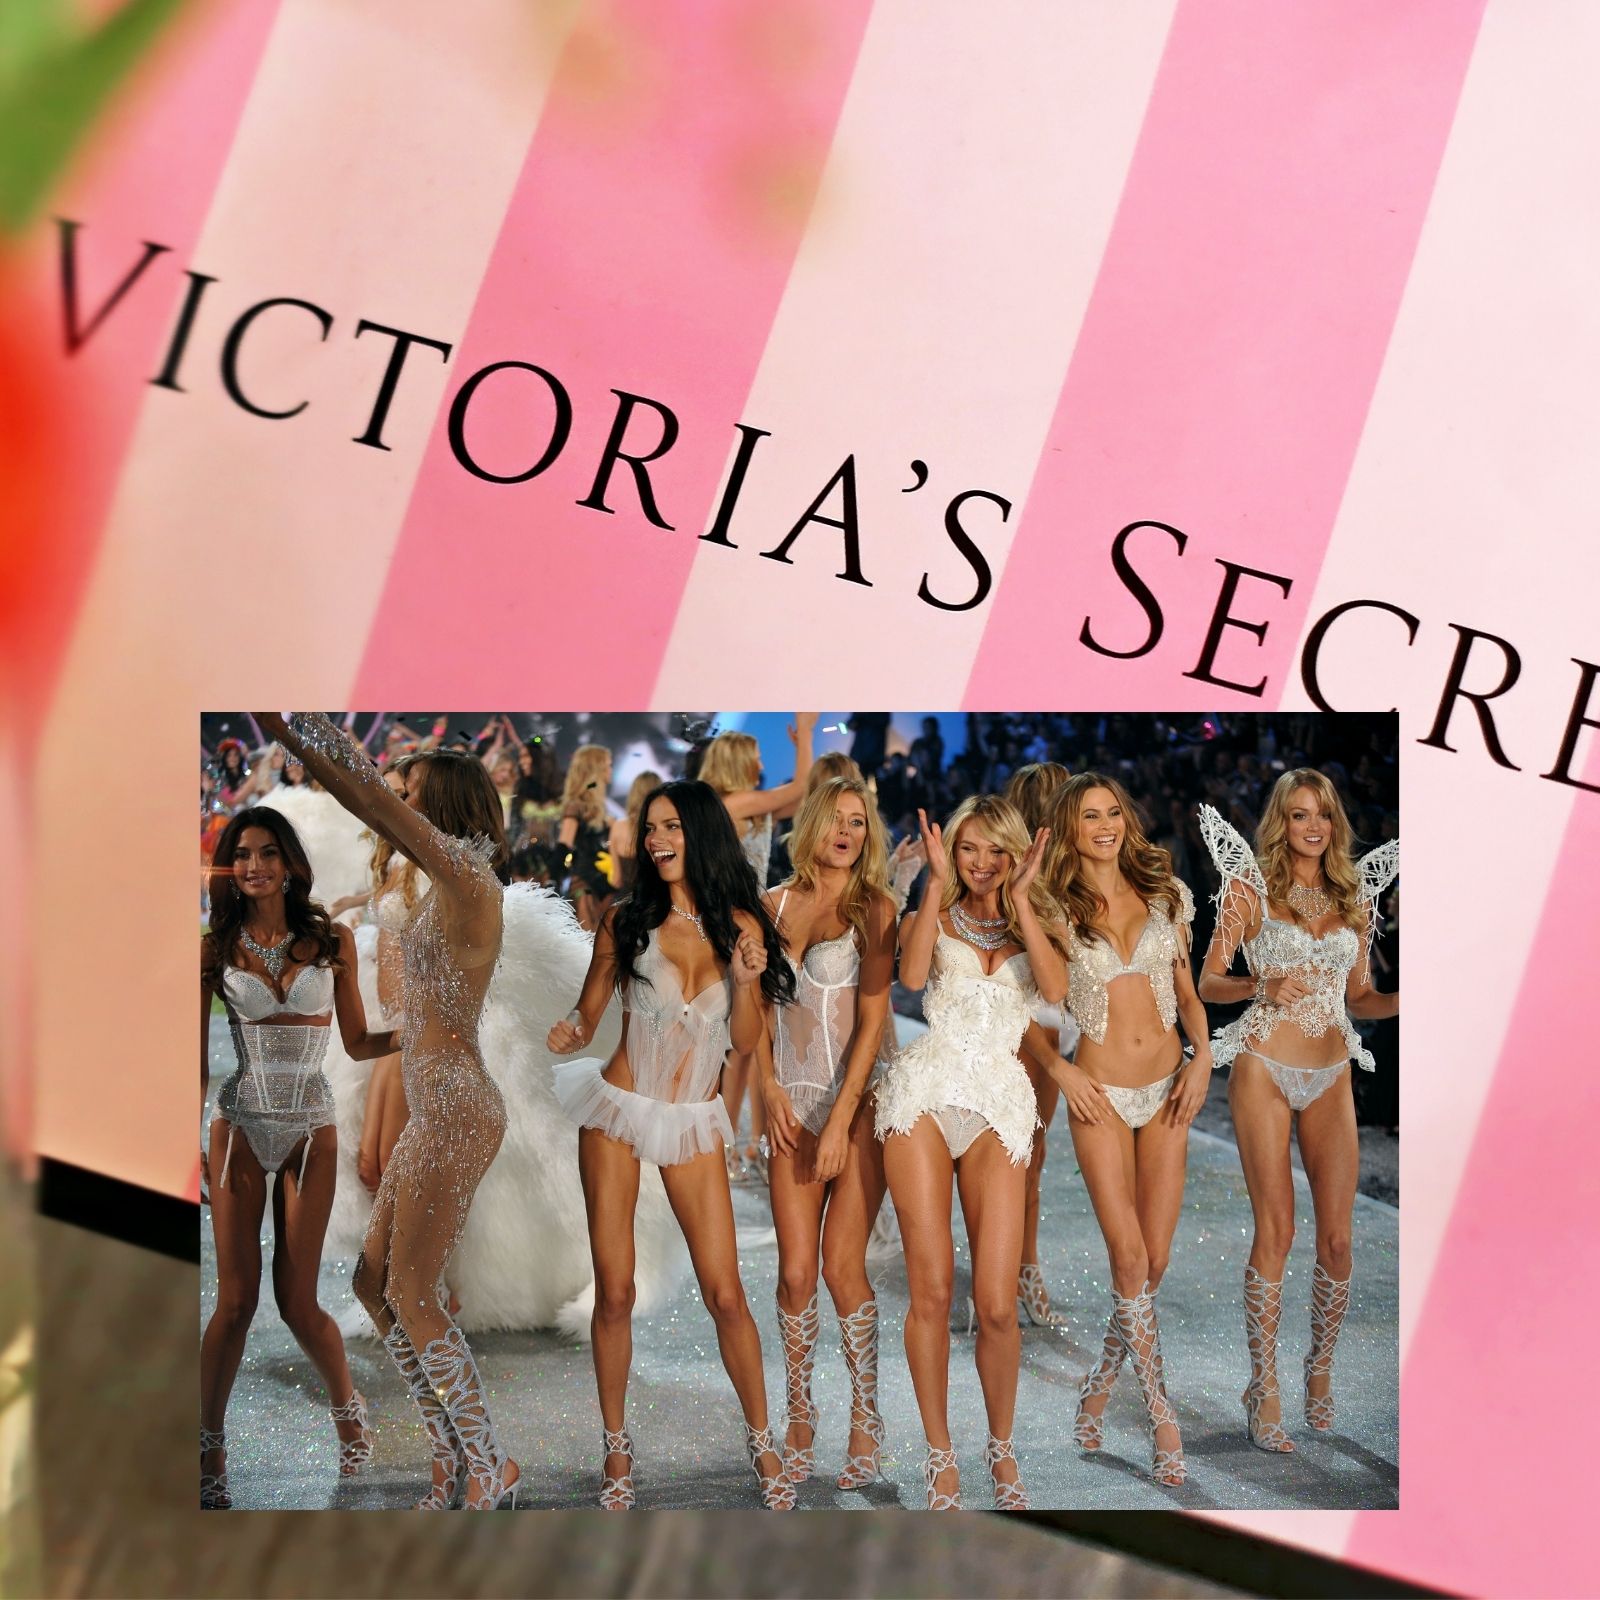 A Quest to Replace Victoria's Secret, by Anni .L.